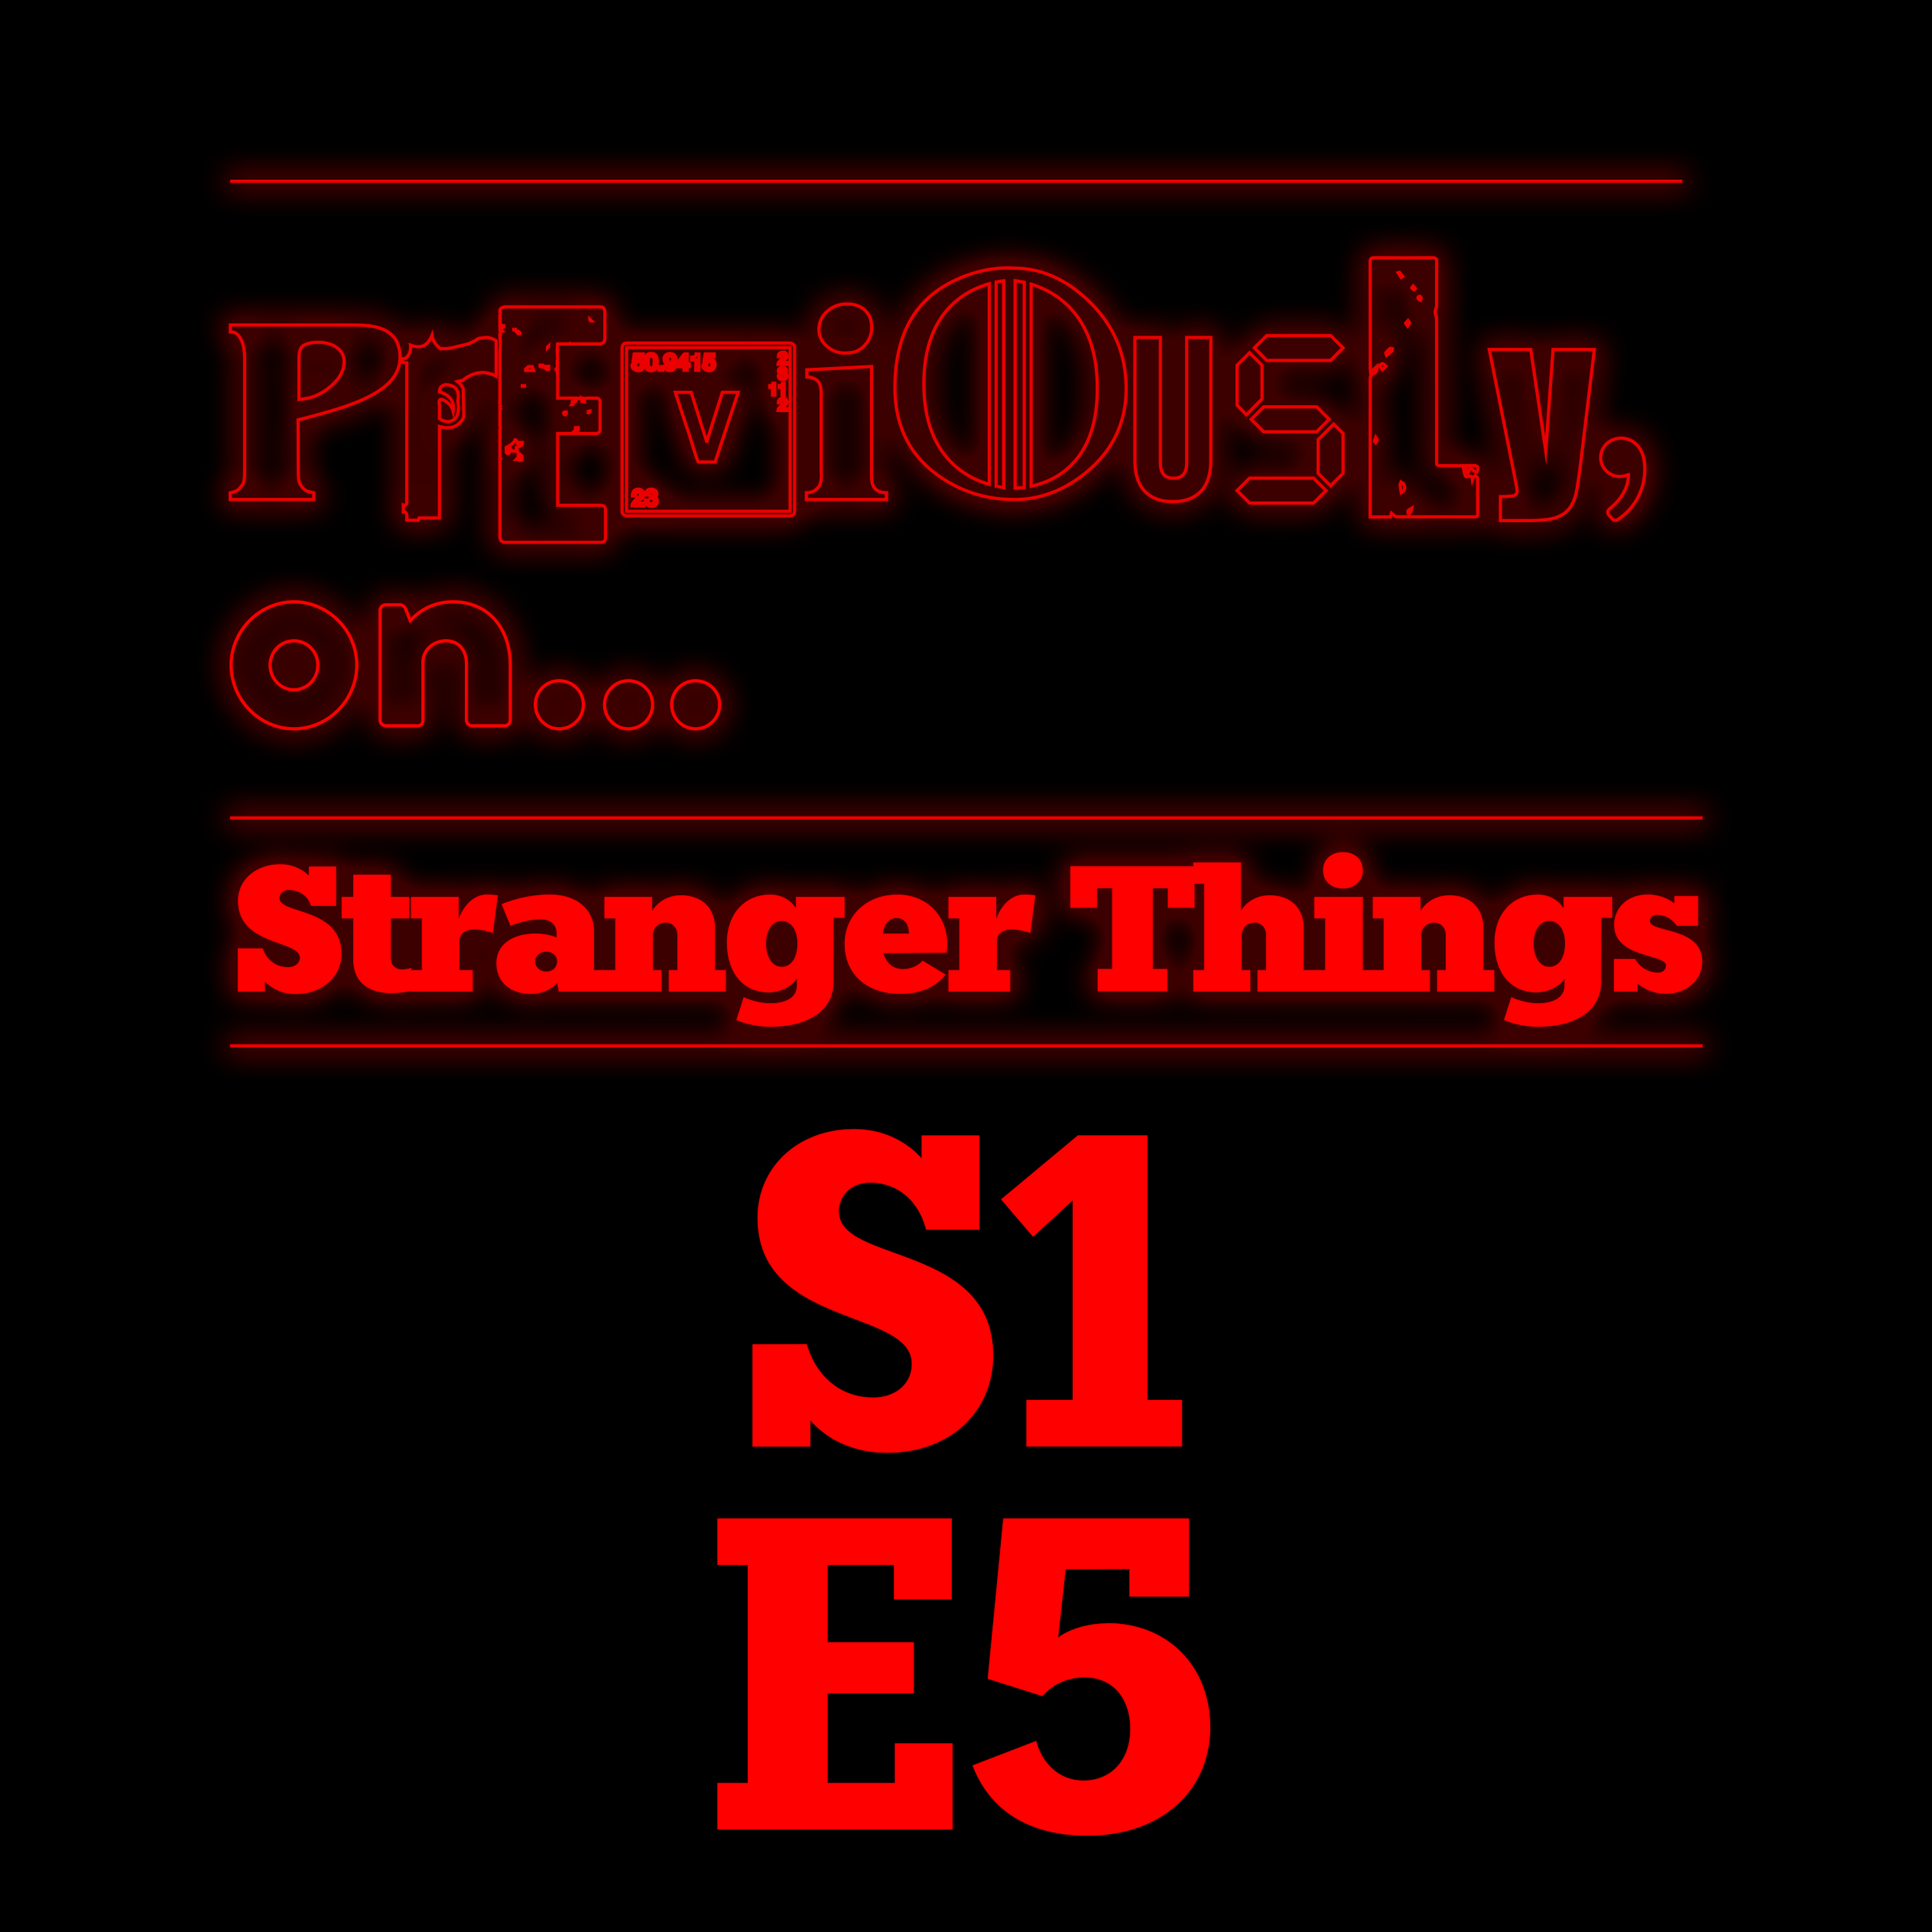 Stranger Things S1E5 - The Flea & the Acrobat